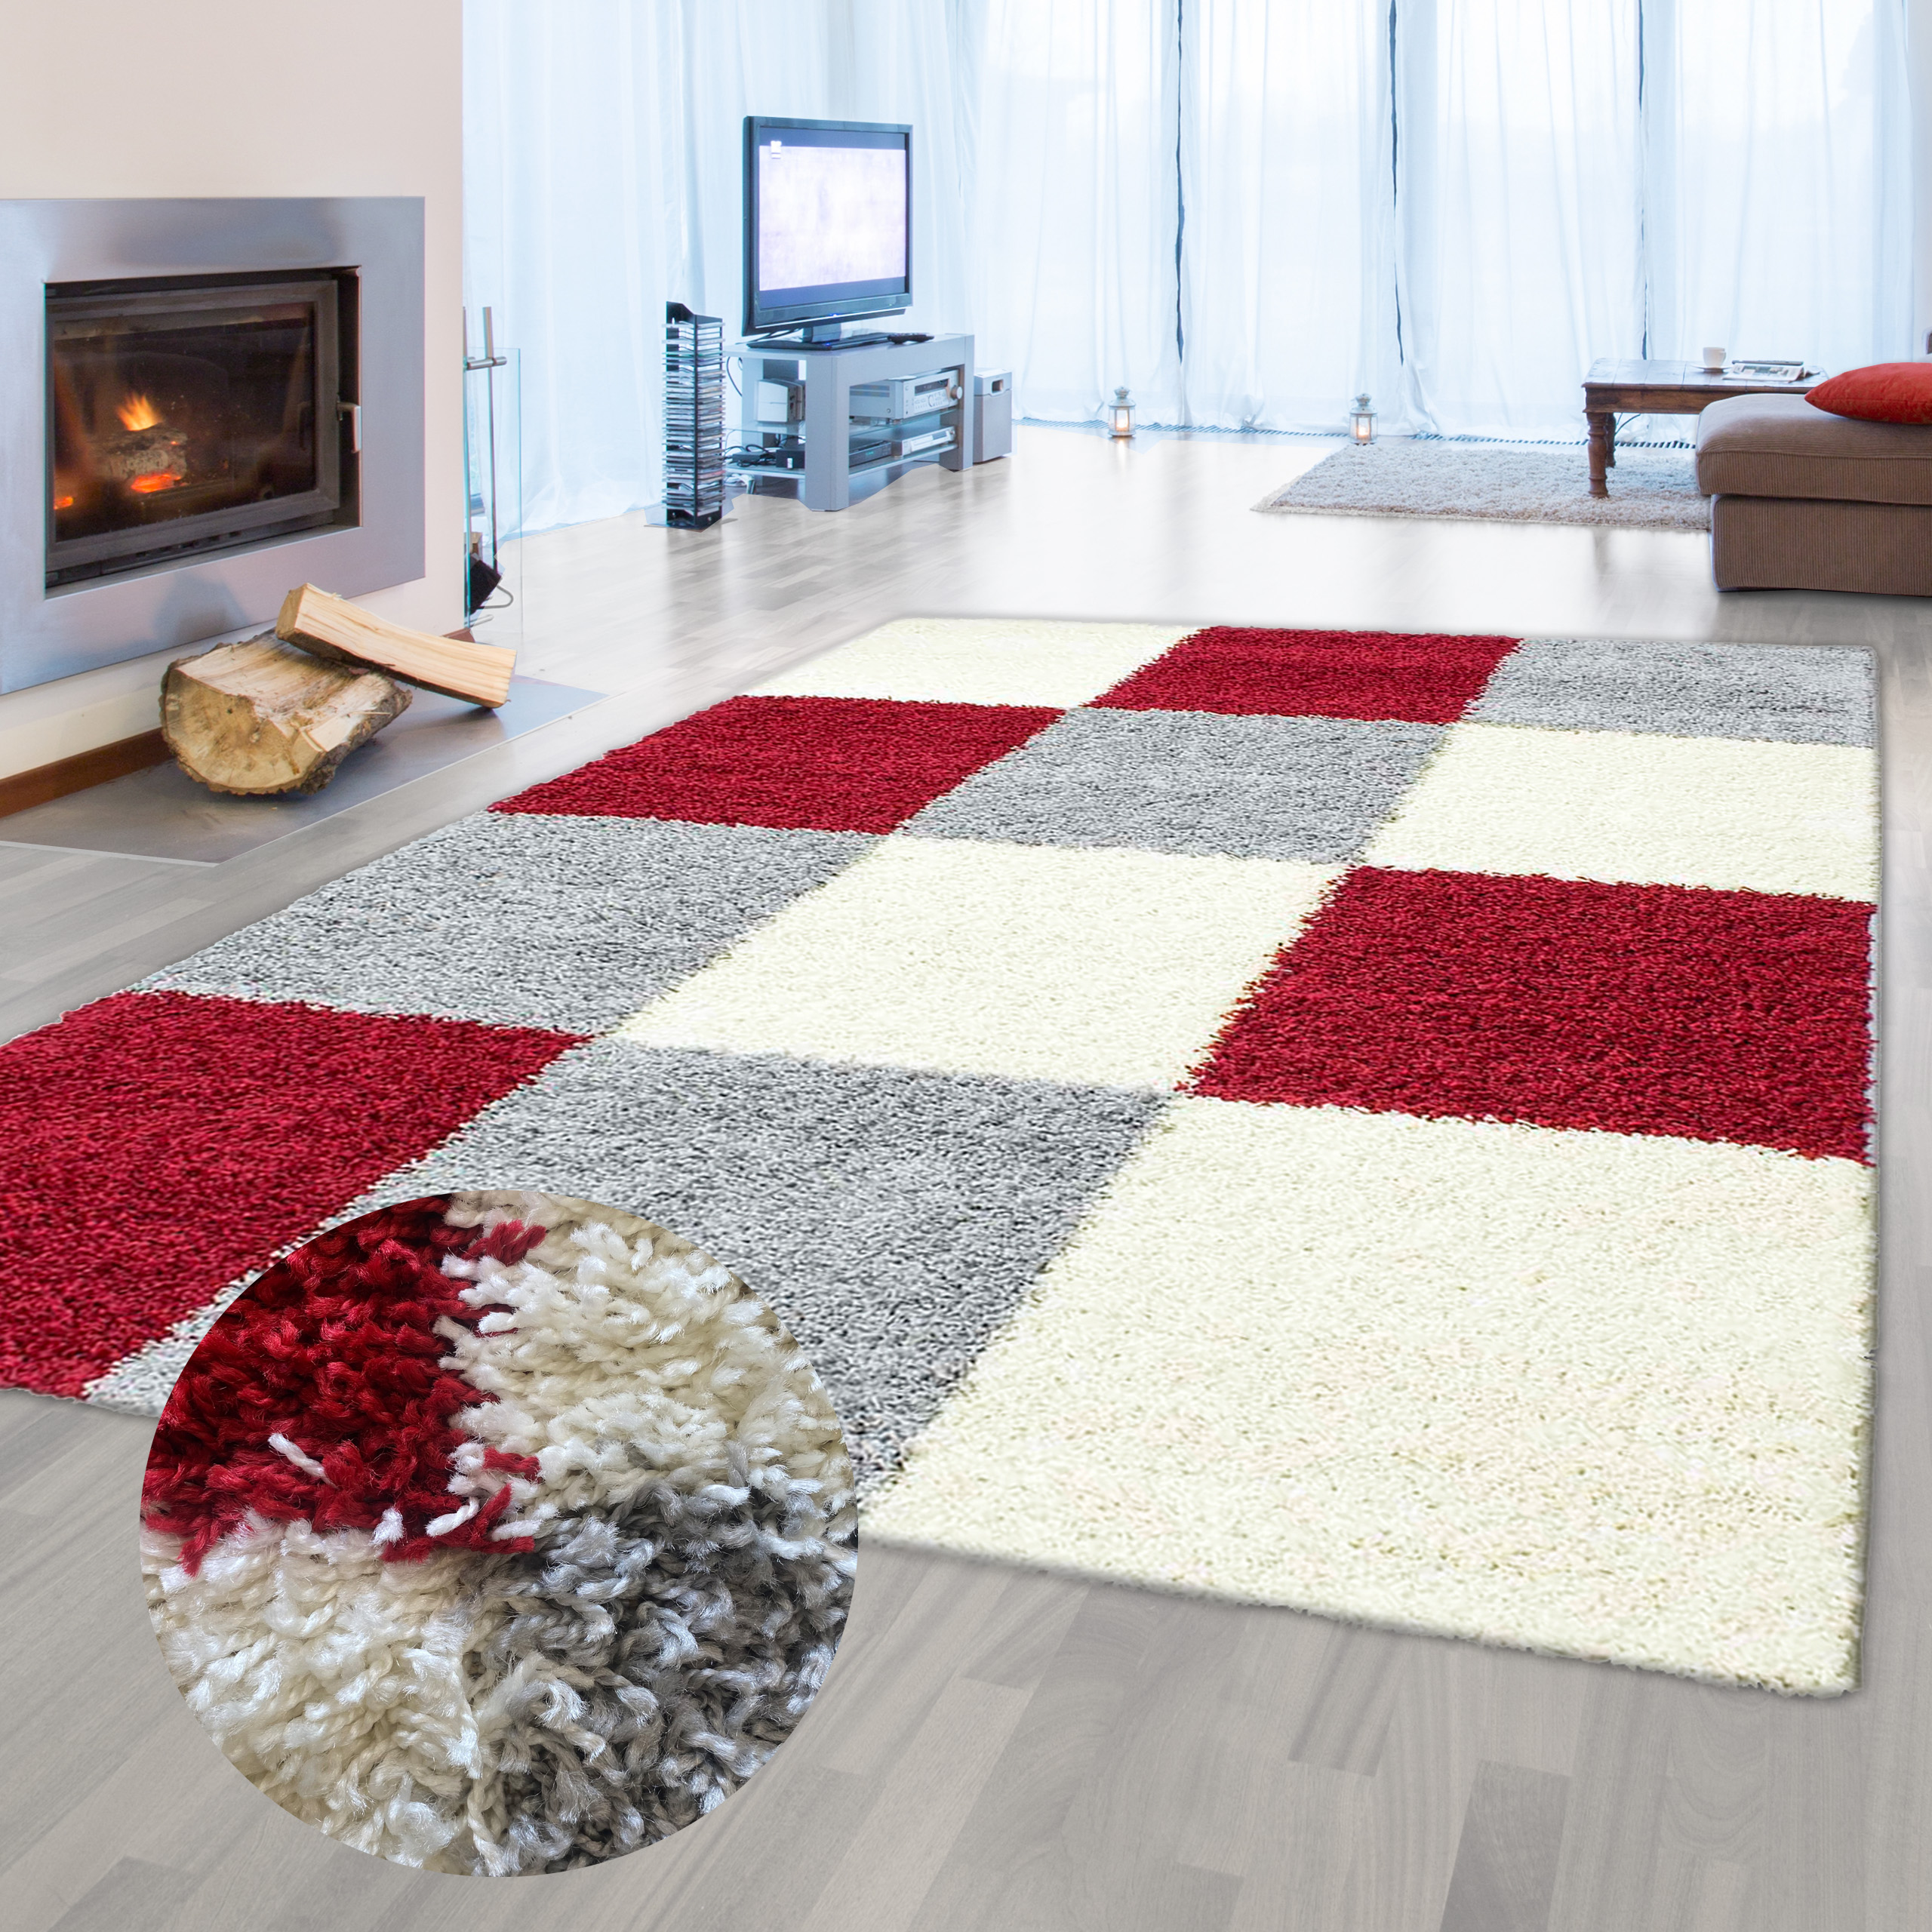 High pile carpets & quality, pile prices shop quality, fair Teppich-Traum Good - online: online: Shaggy Shaggy Good & fair shop pricesHigh carpets